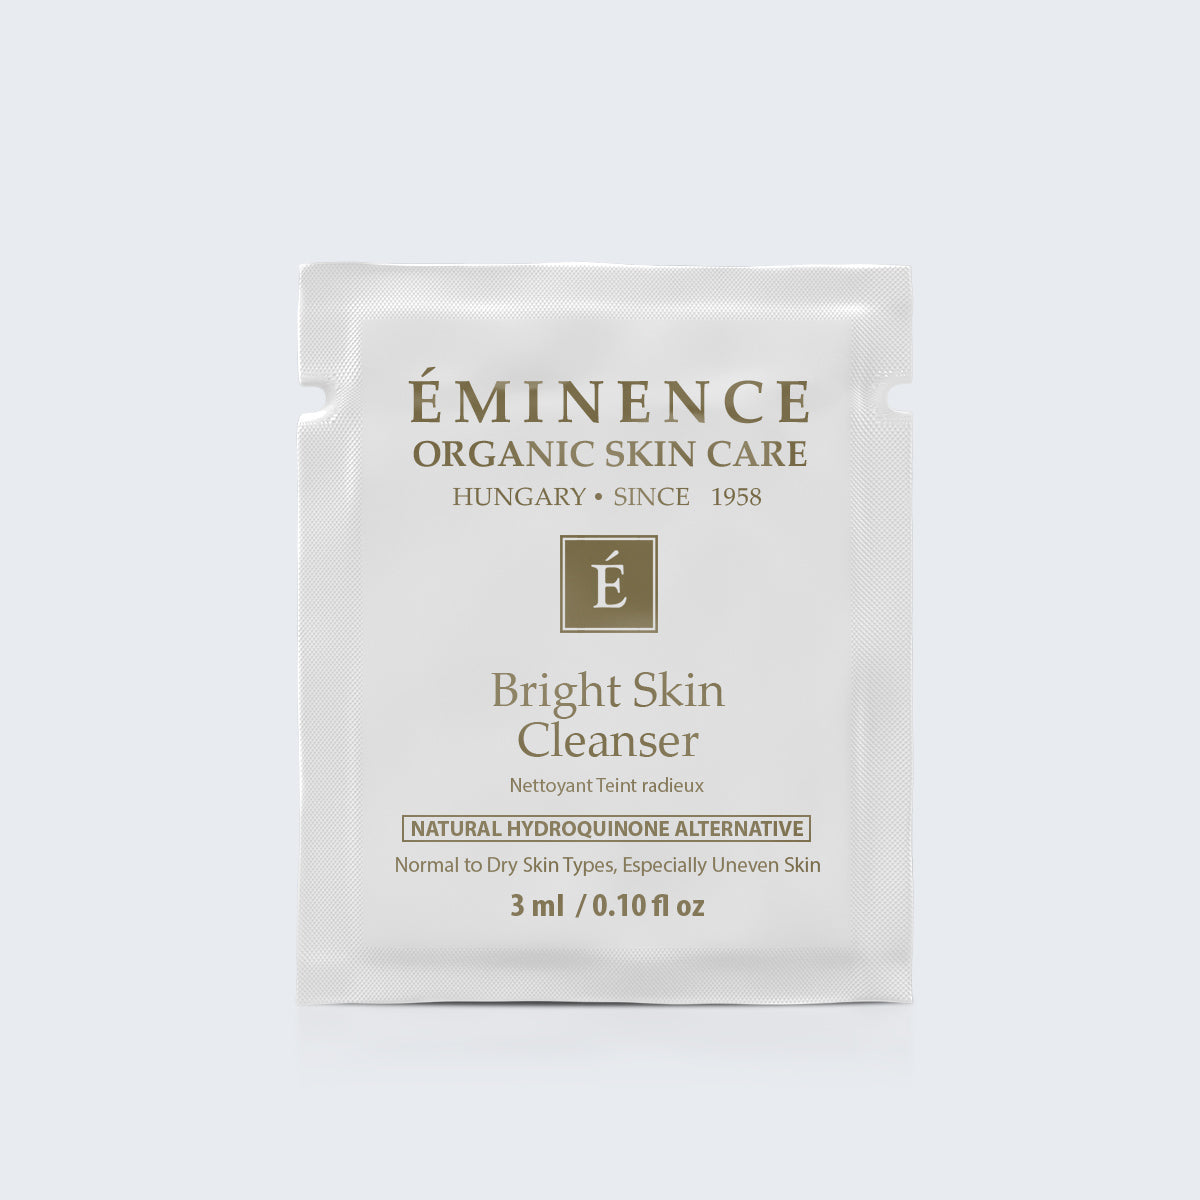 Eminence Organics Bright Skin Cleanser Card Sample